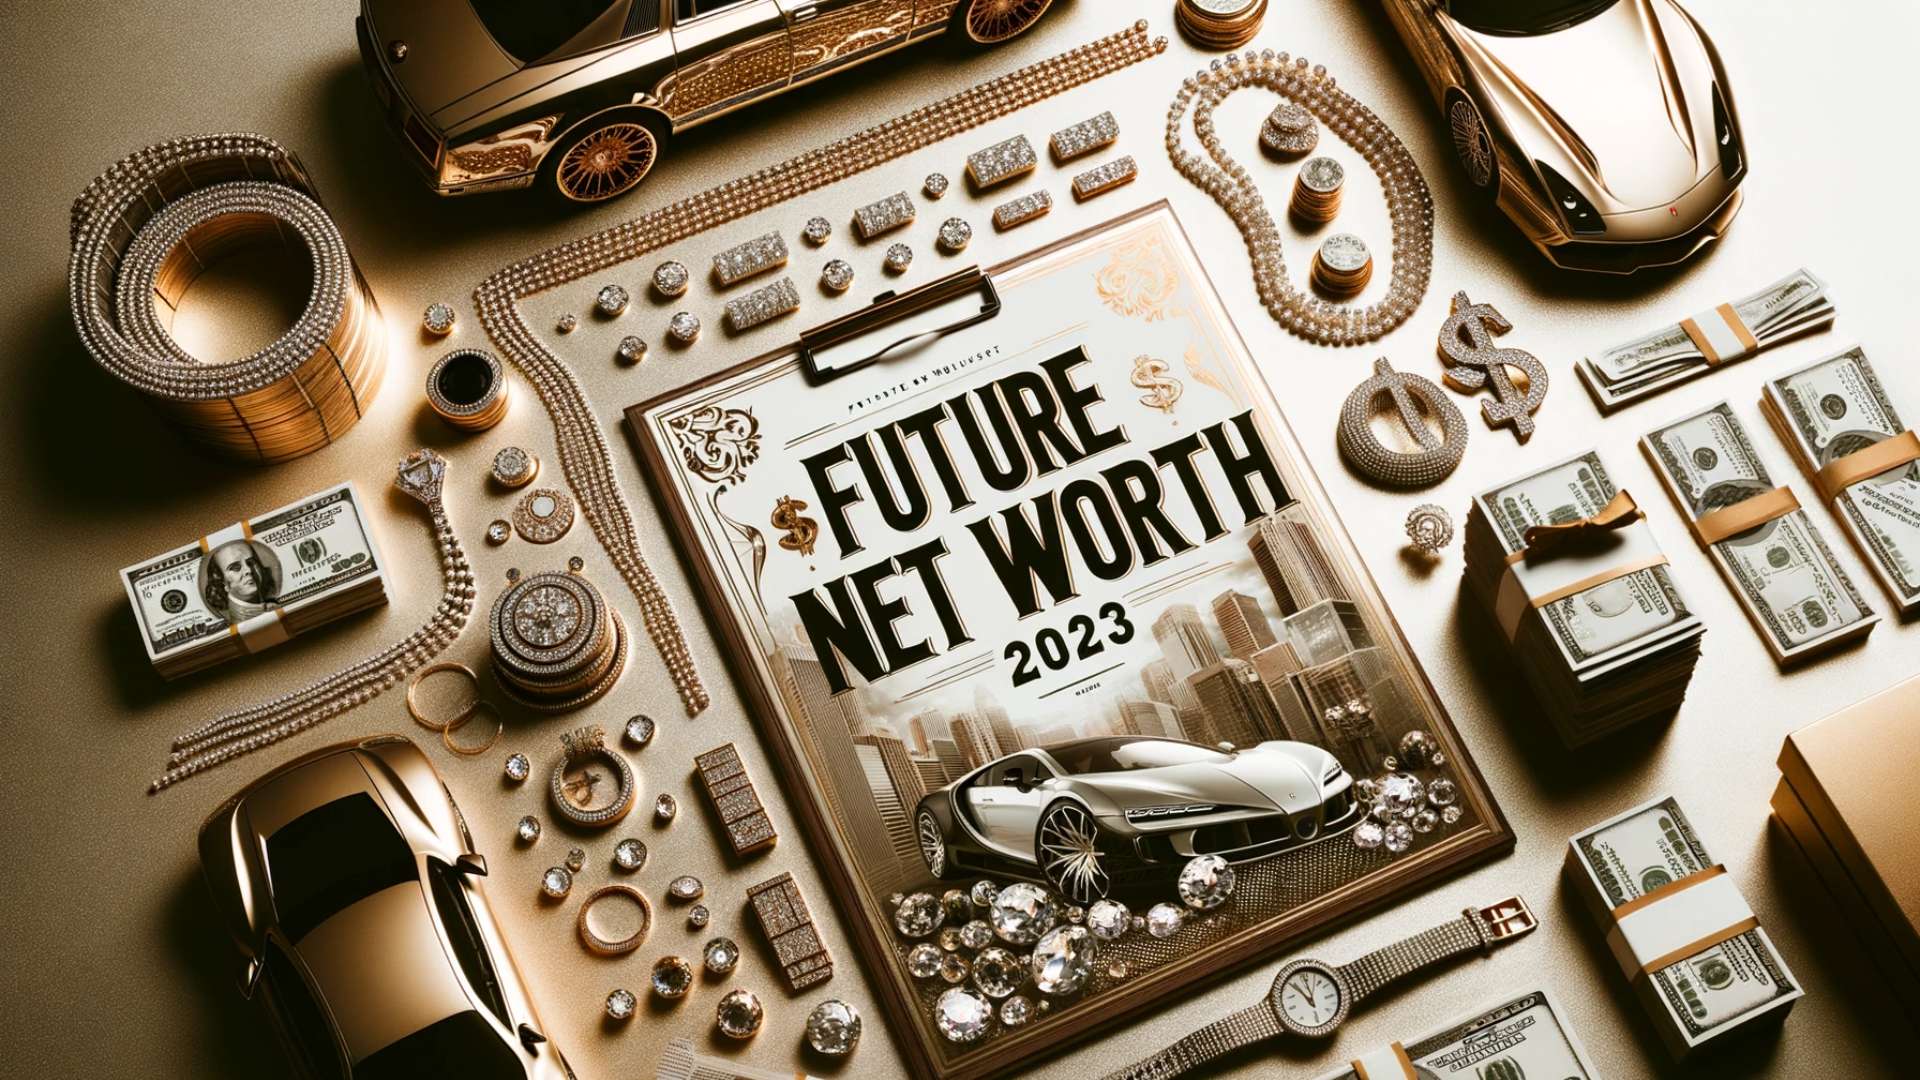 FUTURE NET WORTH